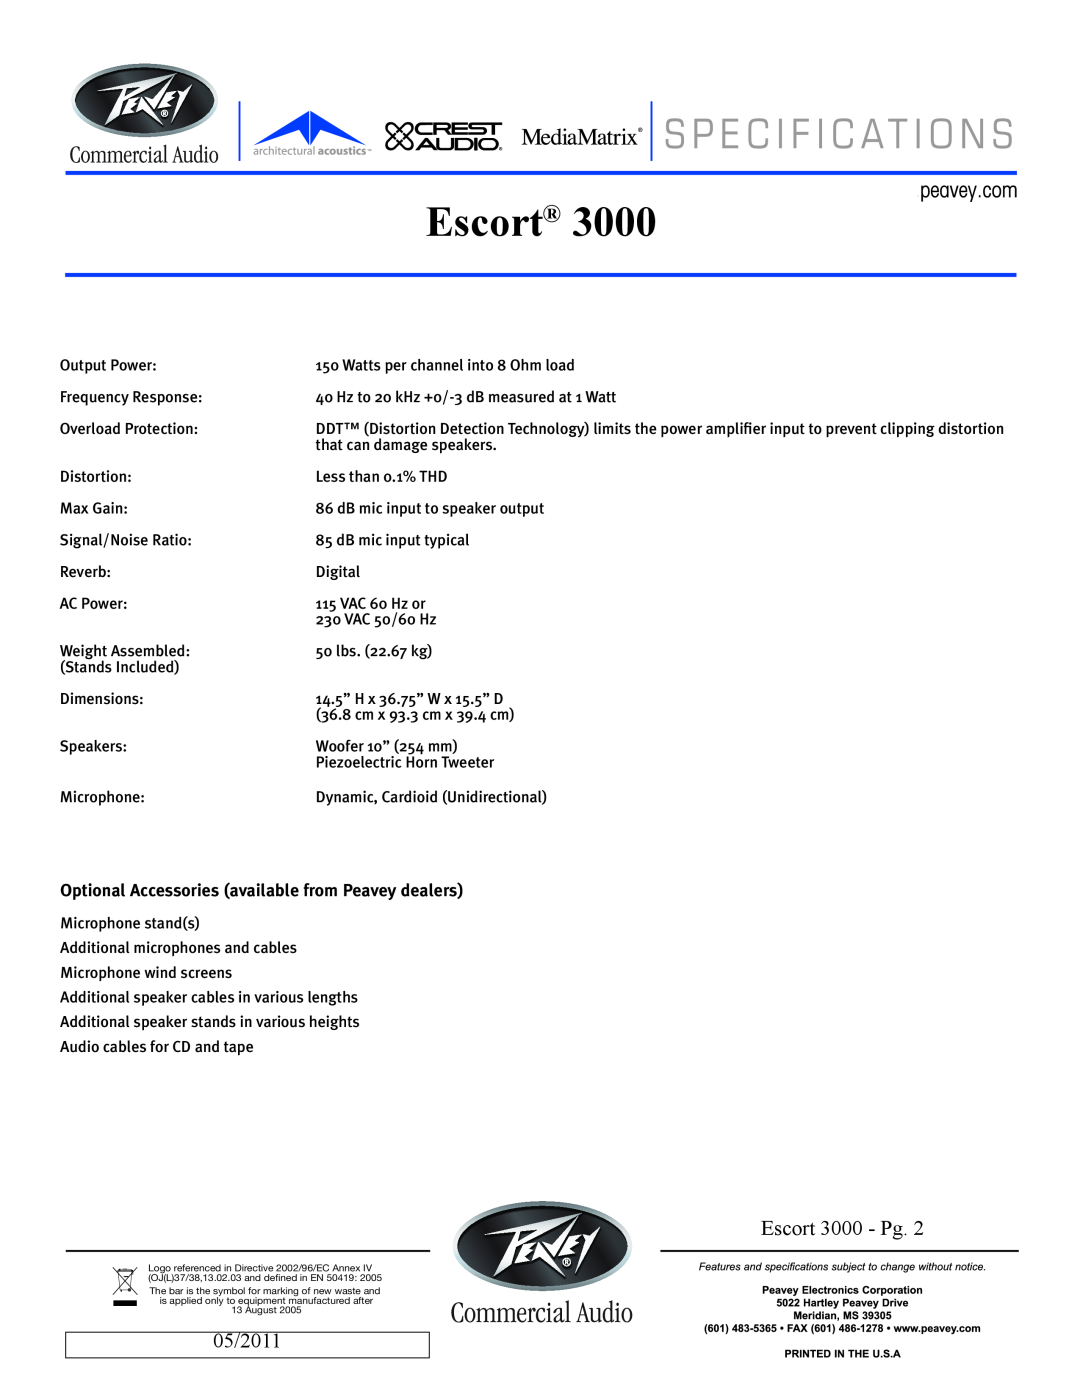 Peavey manual Escort 3000 - Pg, 05/2011 